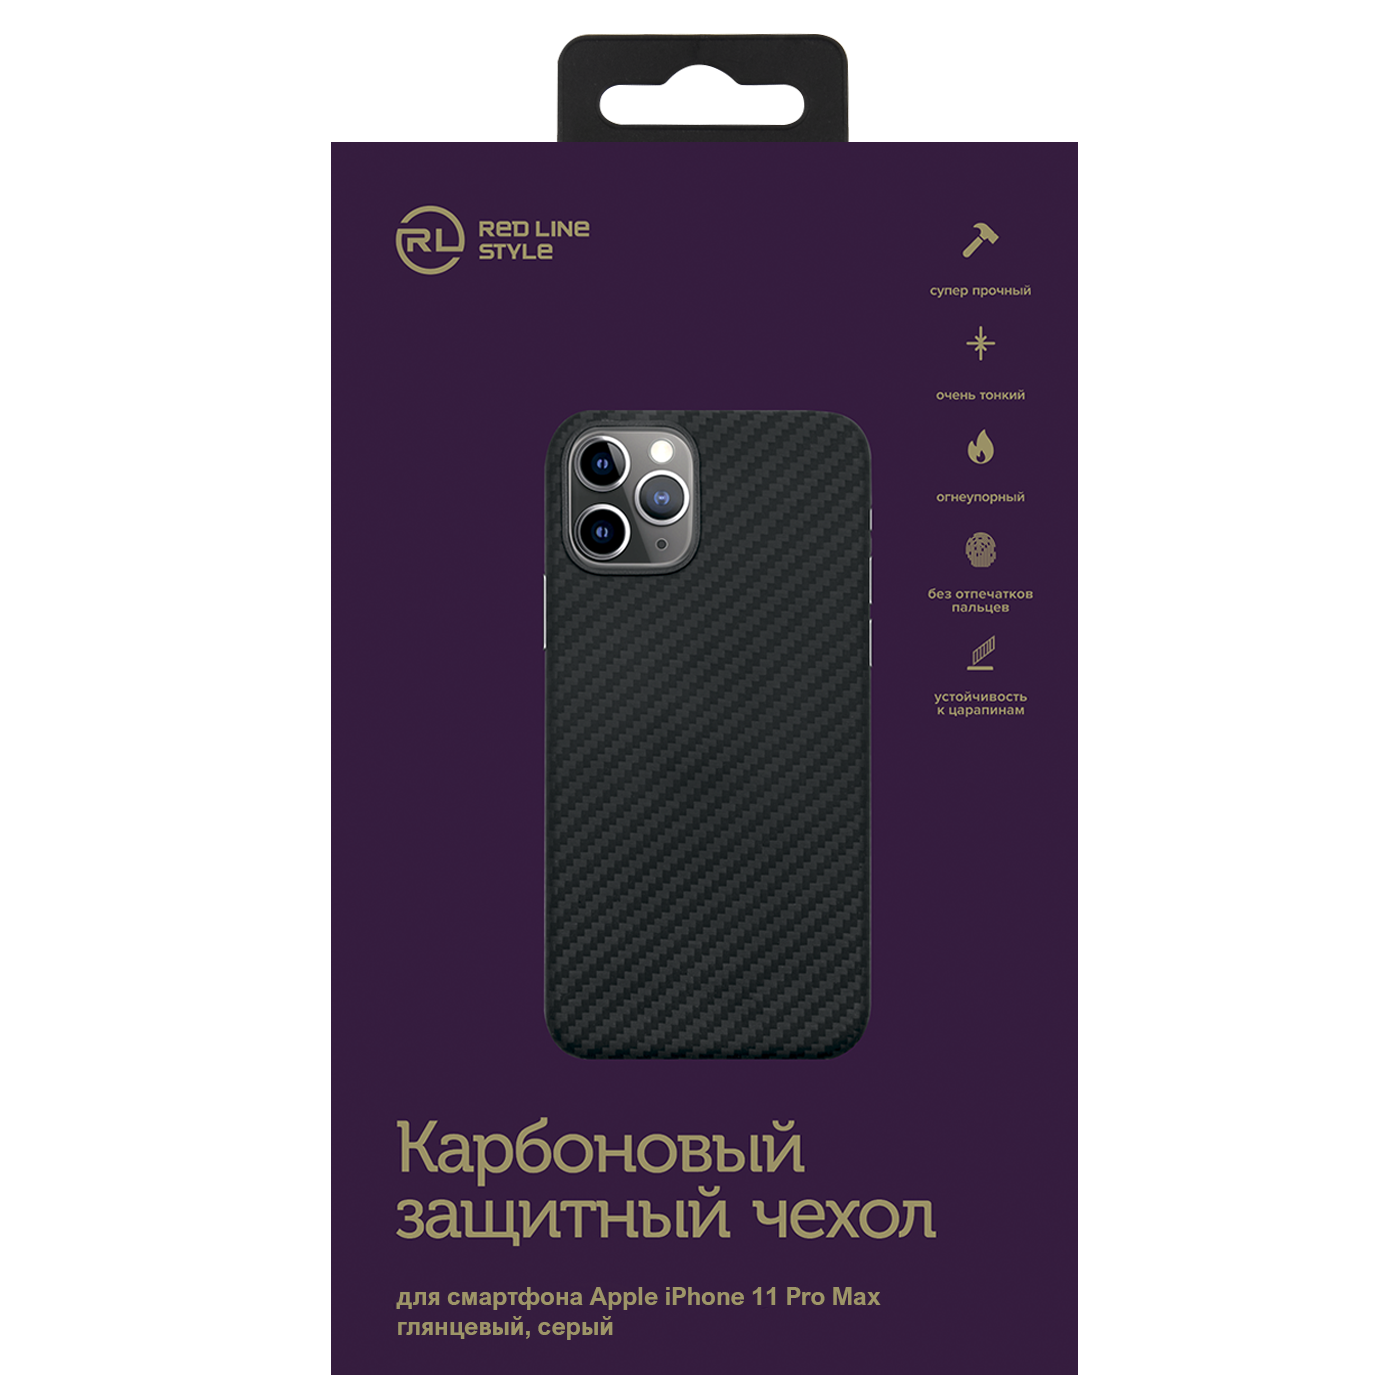 Защитный чехол Redline для iPhone 11 Pro Max, карбон, глянцевый